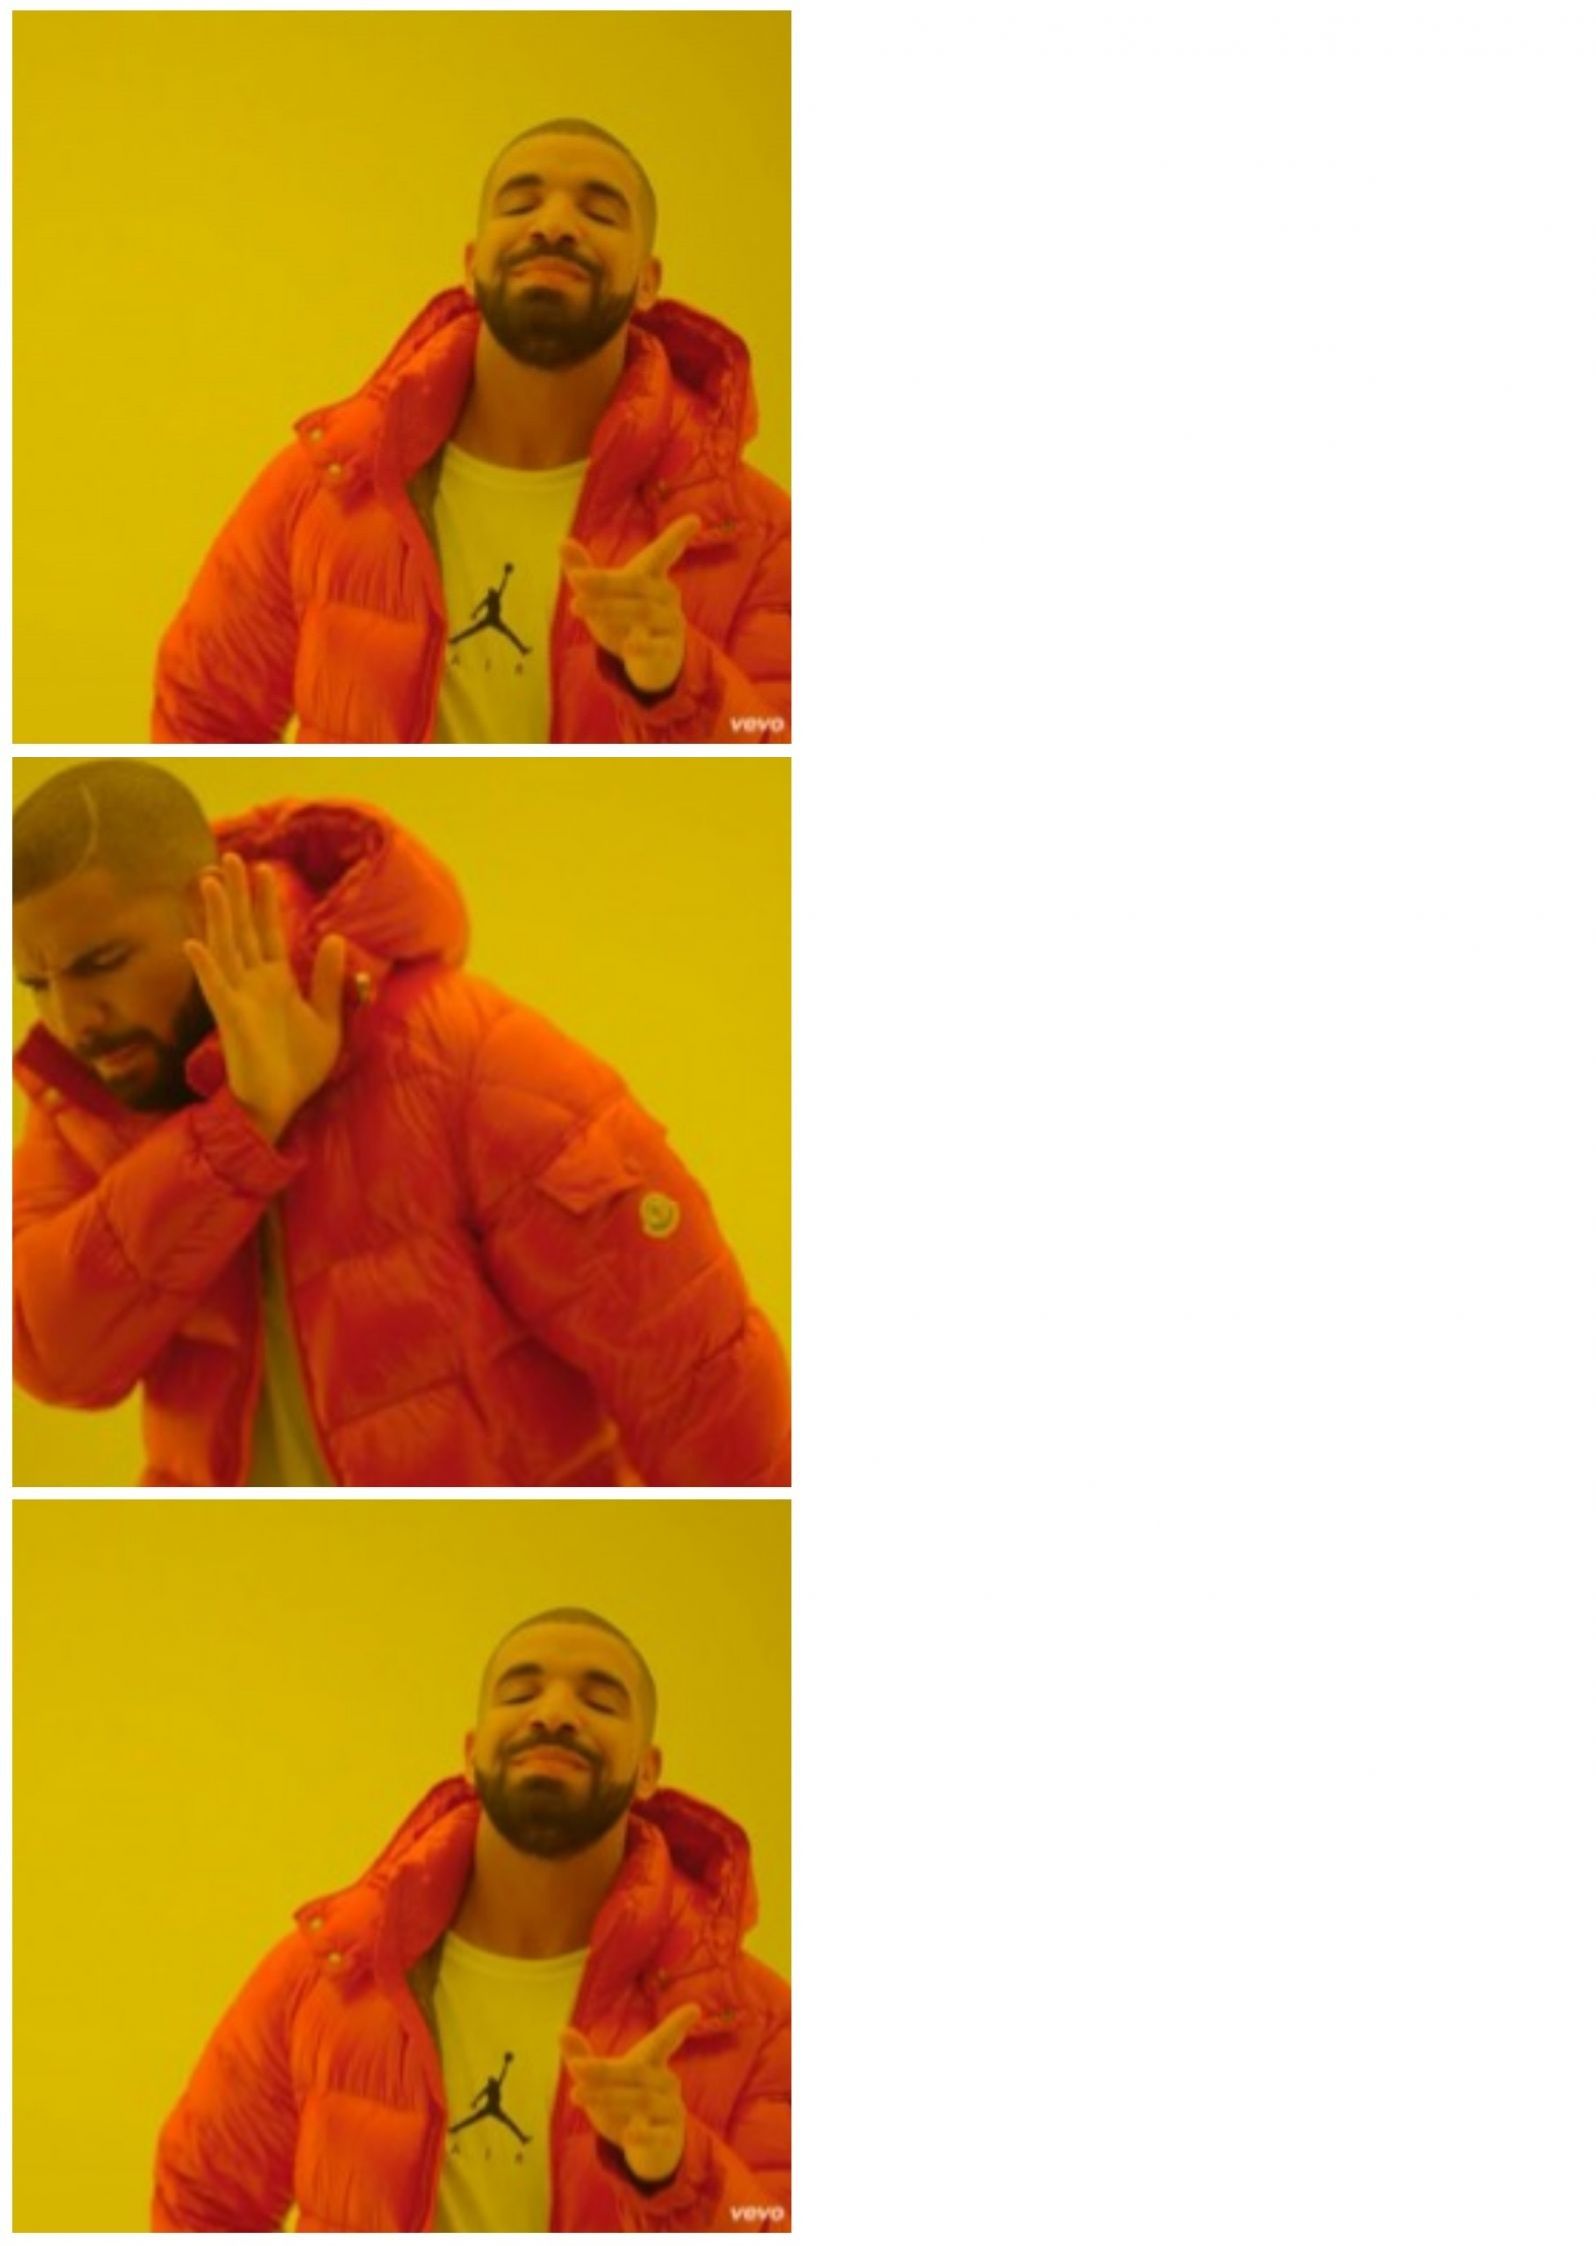 Drake Meme (3 panels) Blank Meme Template